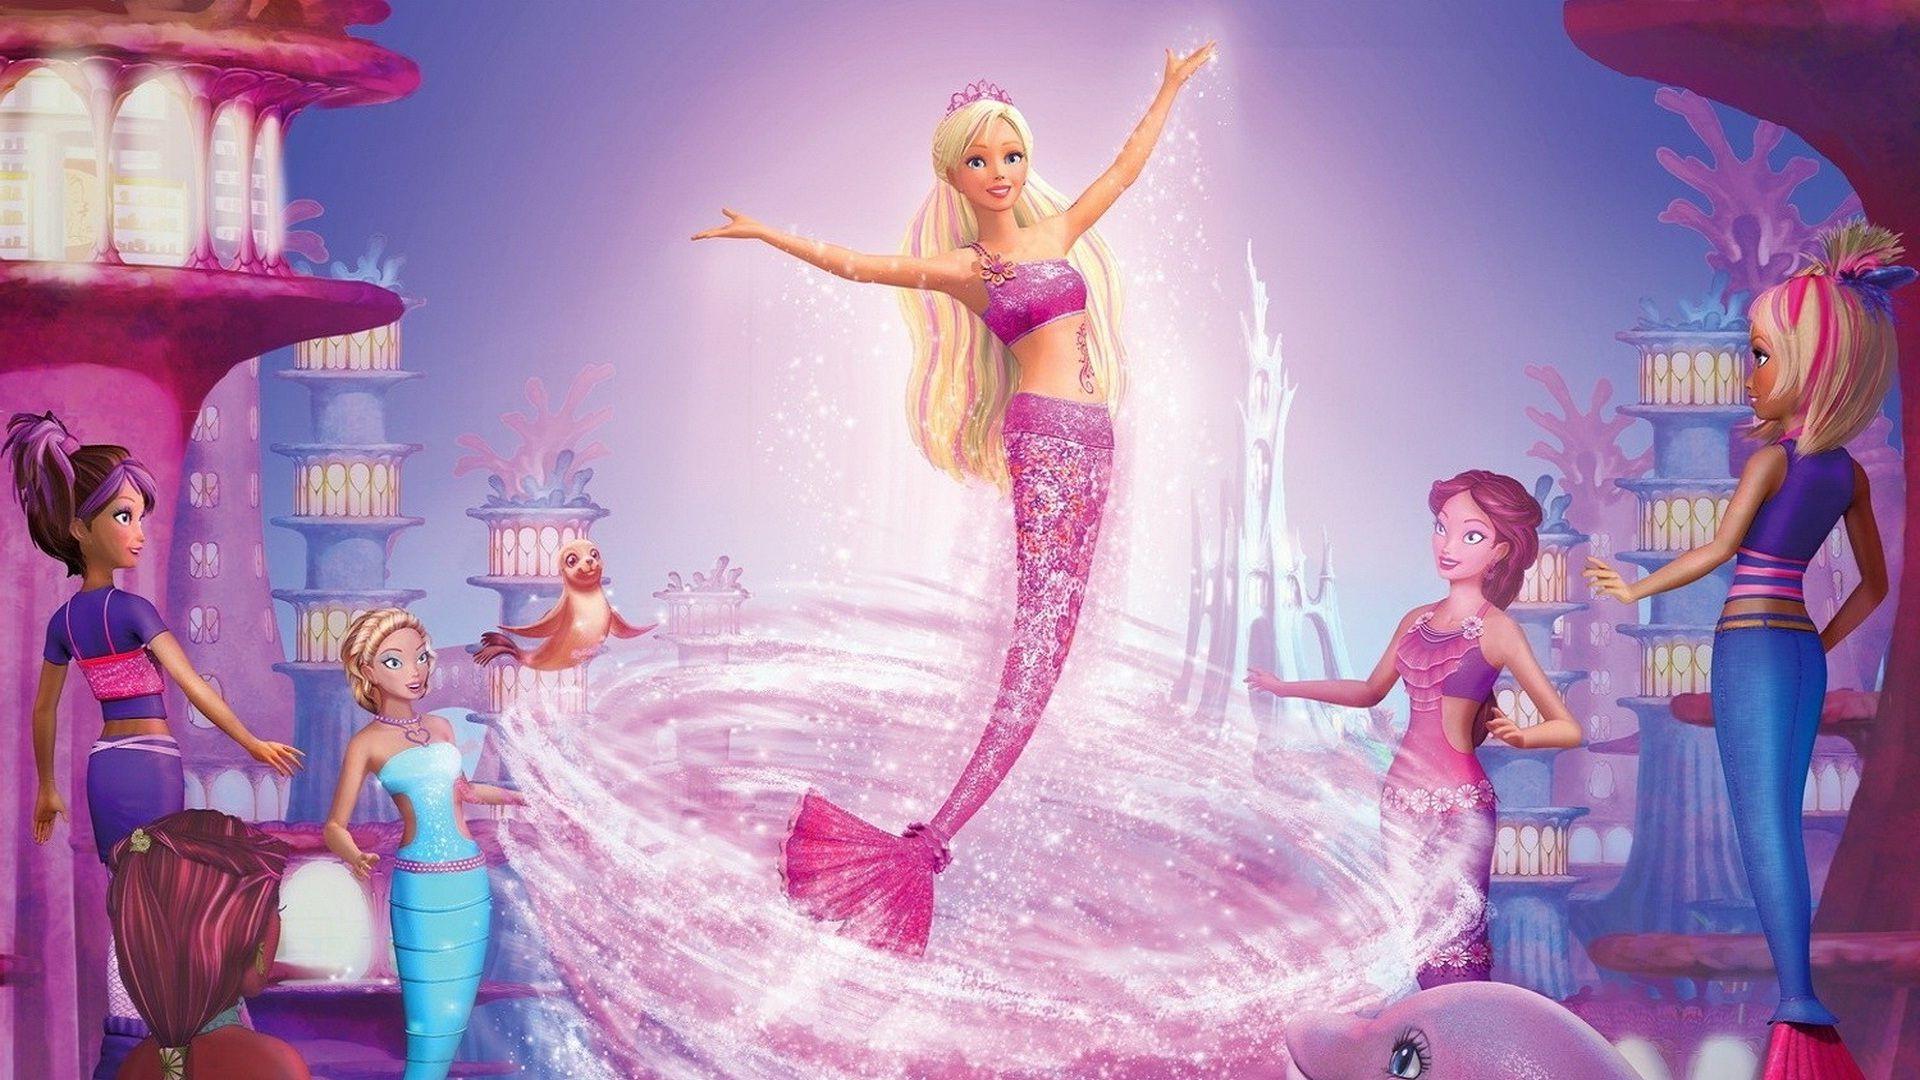 Barbie wallpaper HD free download